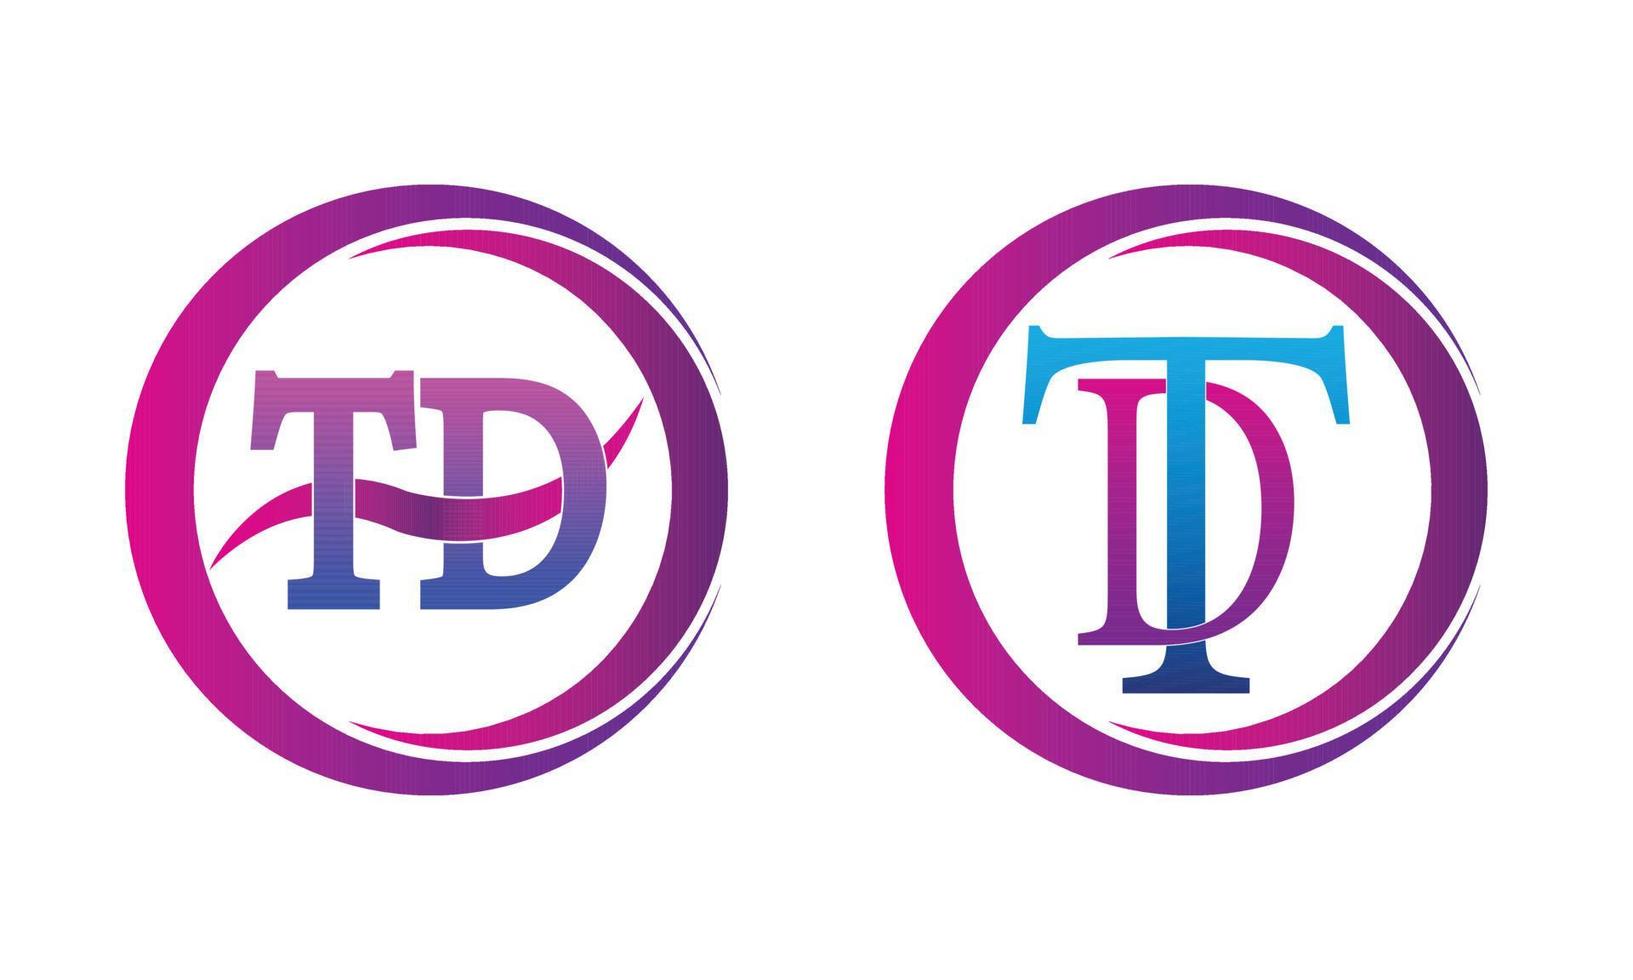 td logo tulubulu design illustrazione vettore logo design